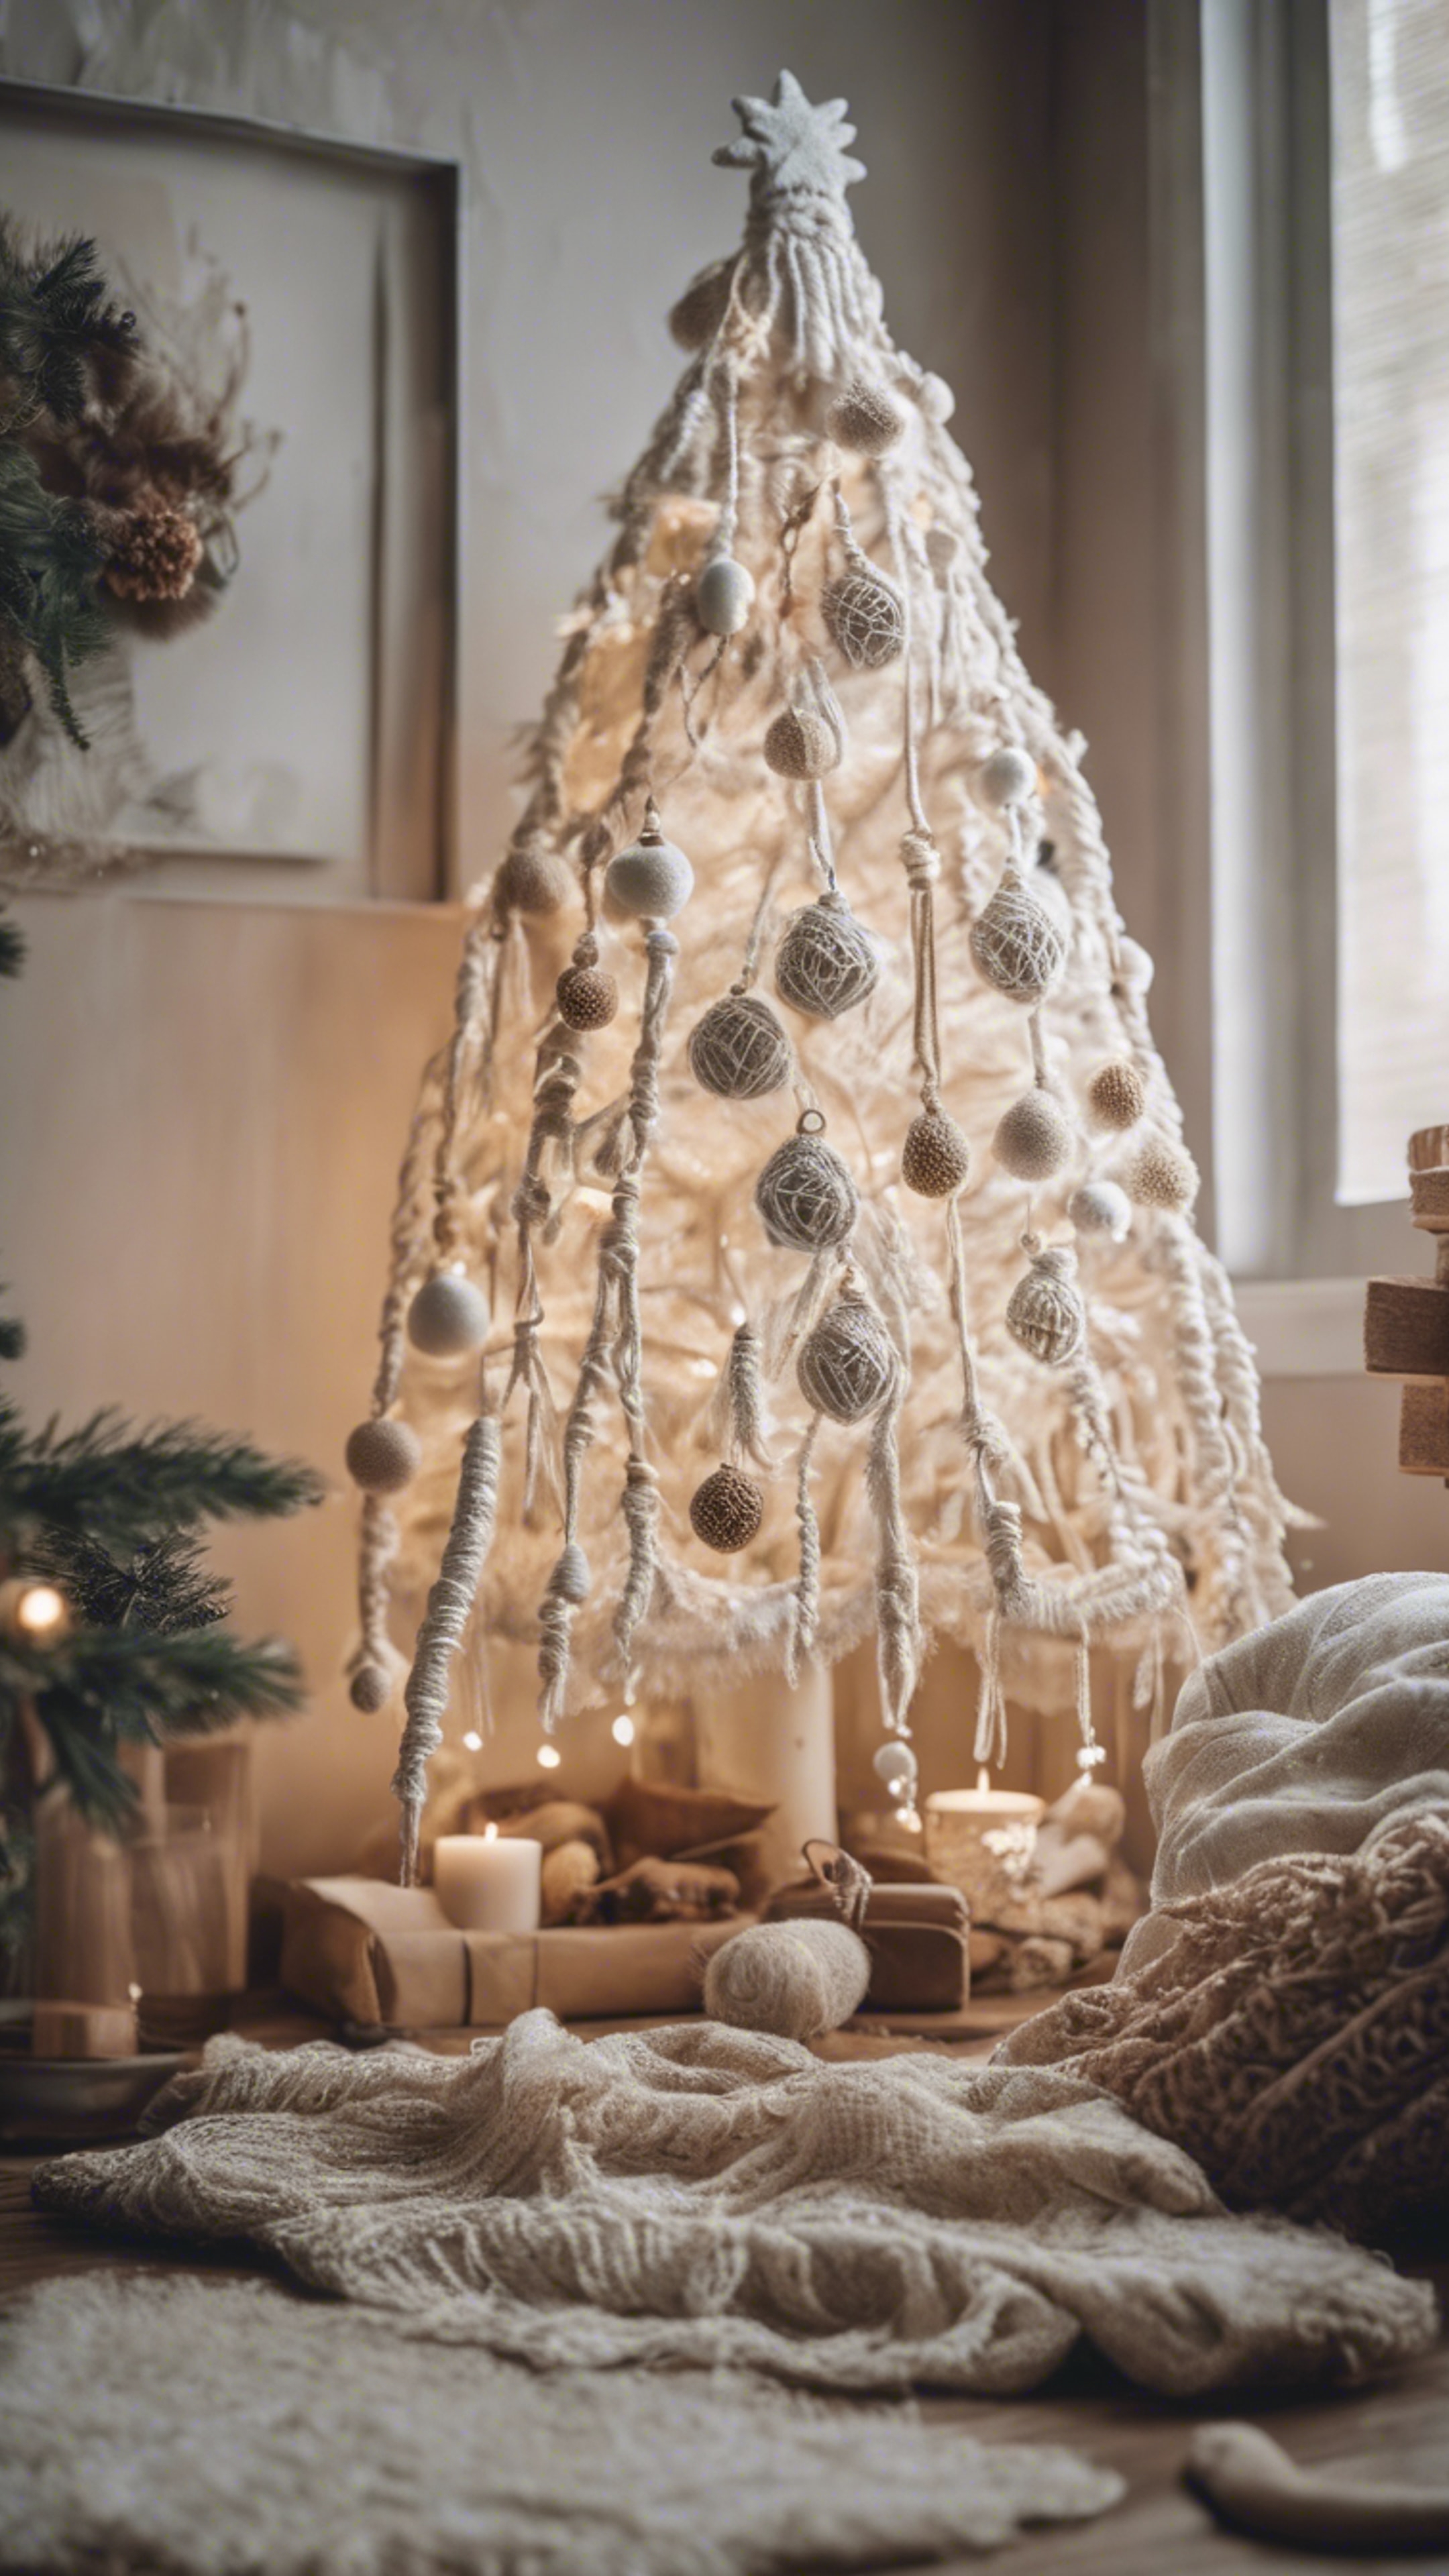 A white Christmas tree adorned with handmade macrame decorations in a boho-inspired room. Papel de parede[c062b7b22ca84faf9af8]